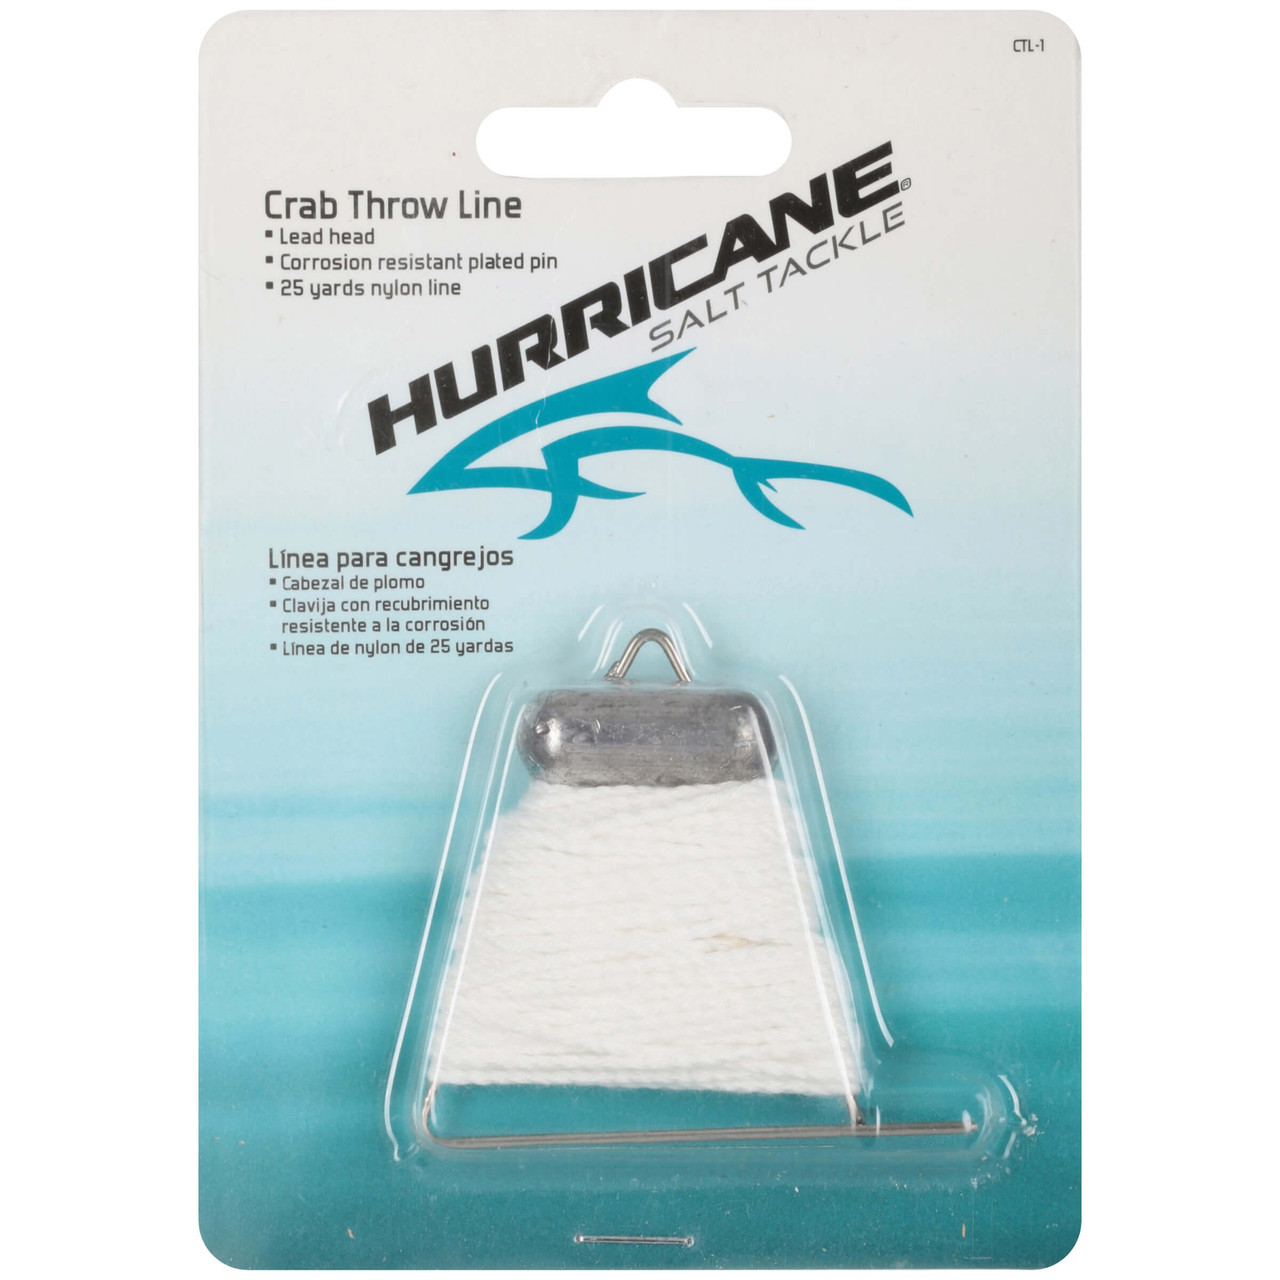 Hurricane CTL-1 Crab Throw Line FISHING